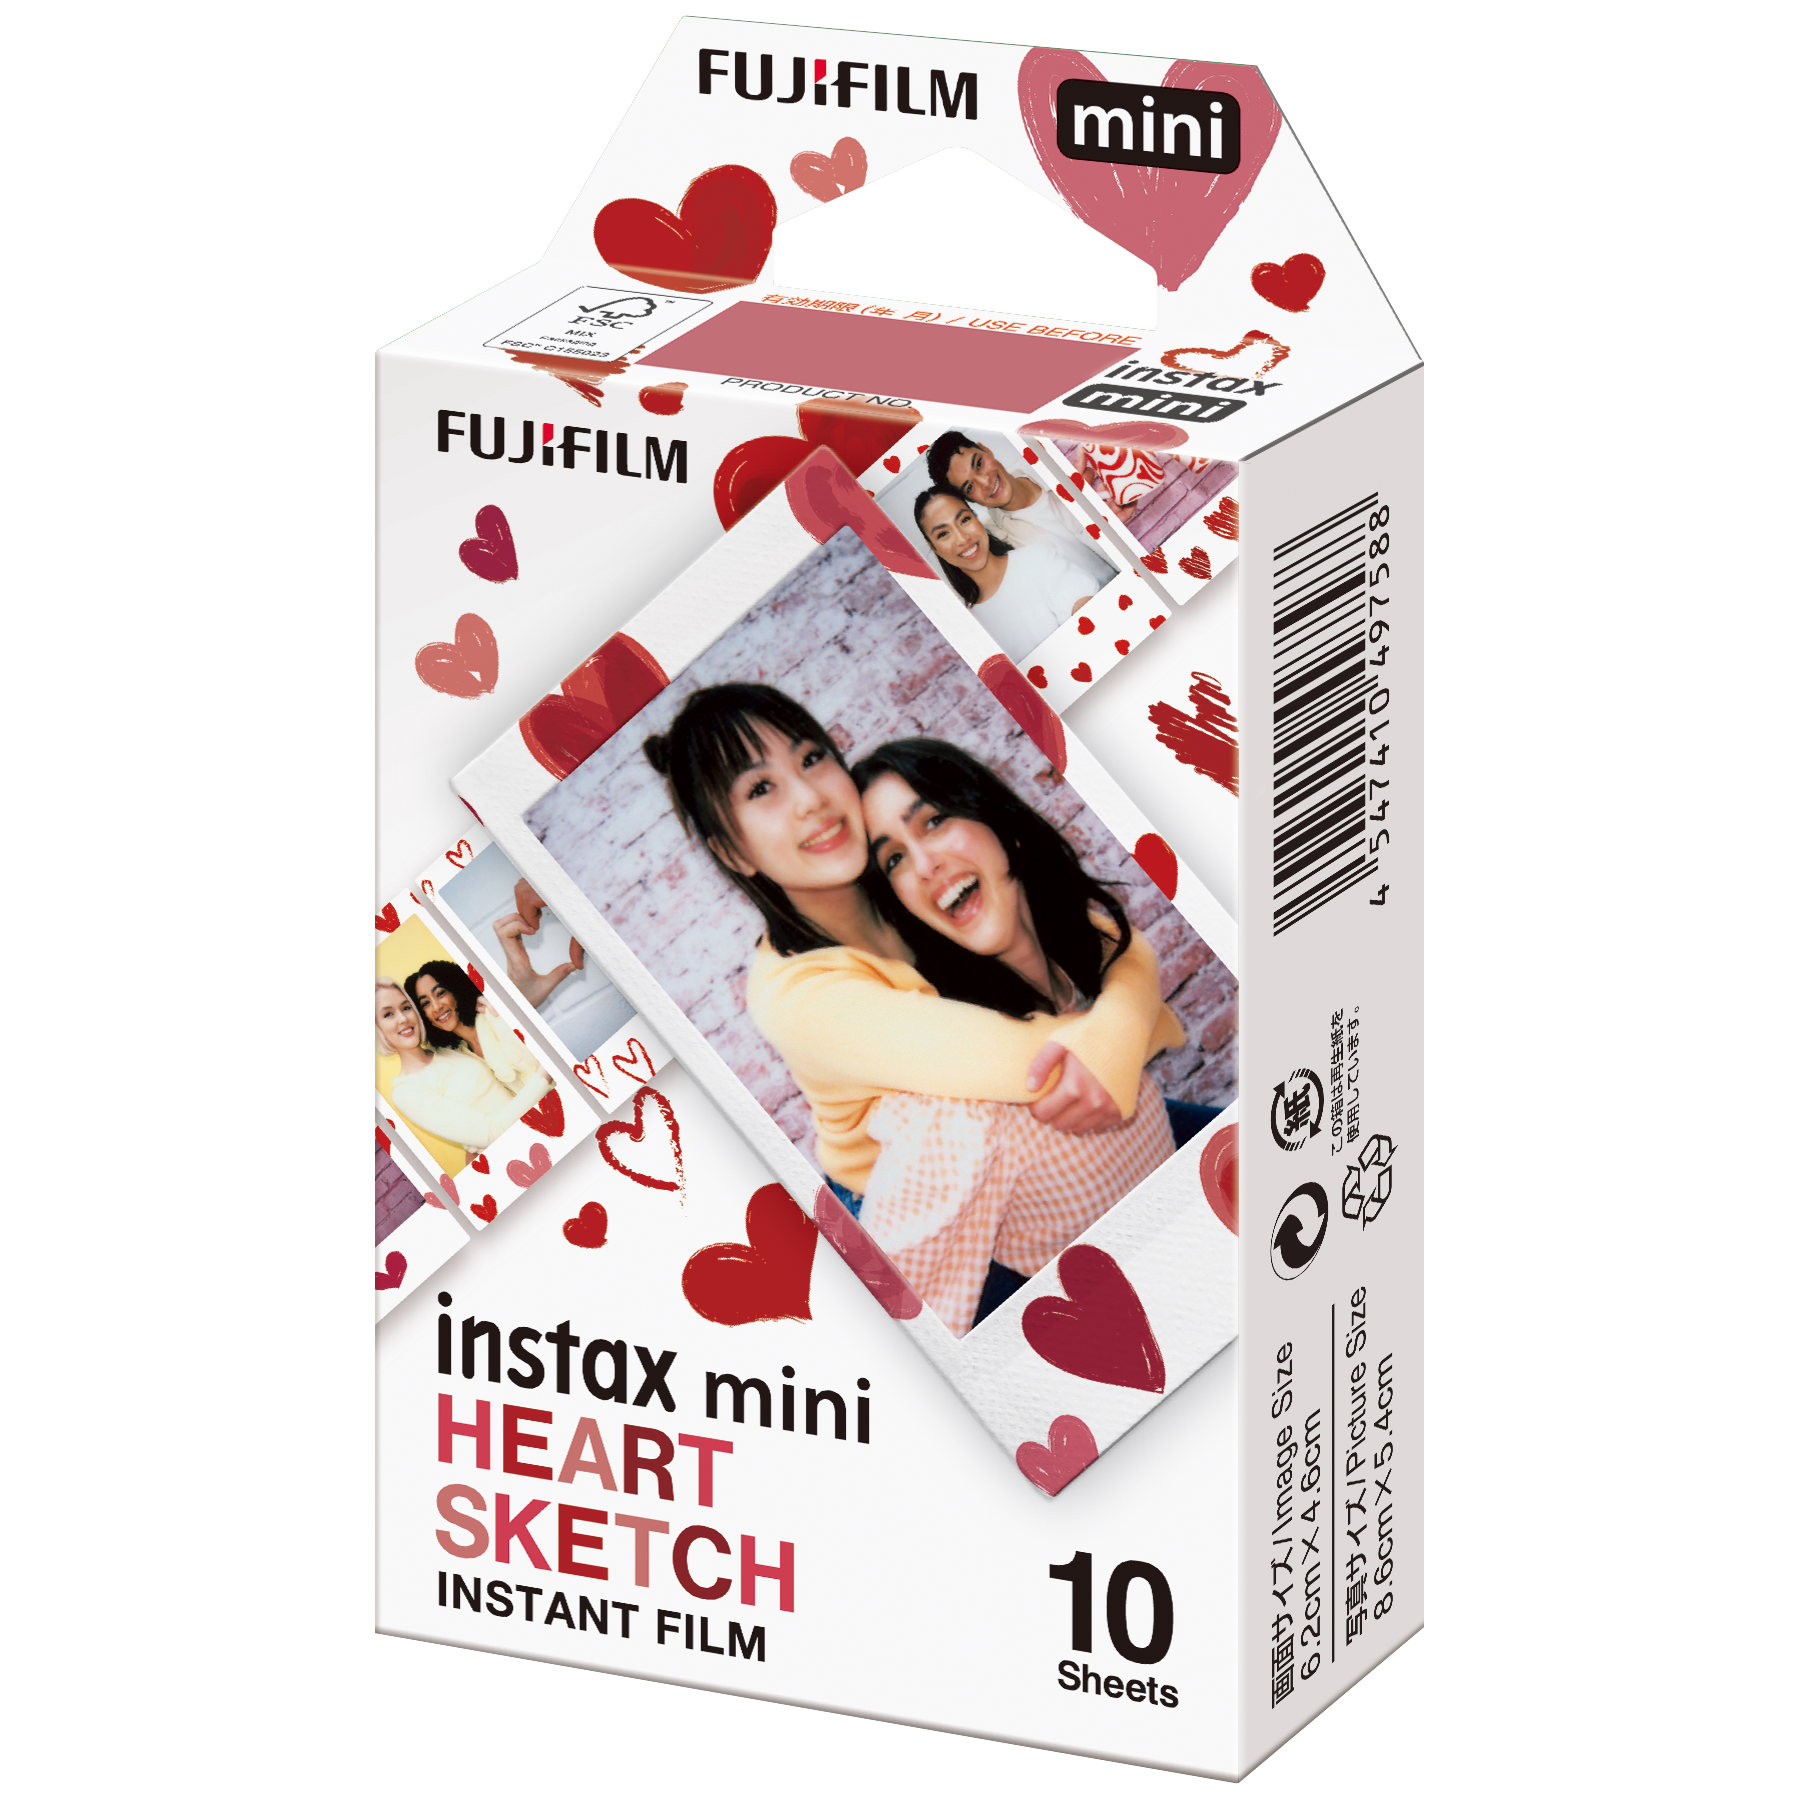 Fujifilm Instax Mini Film - Hearts Sketch